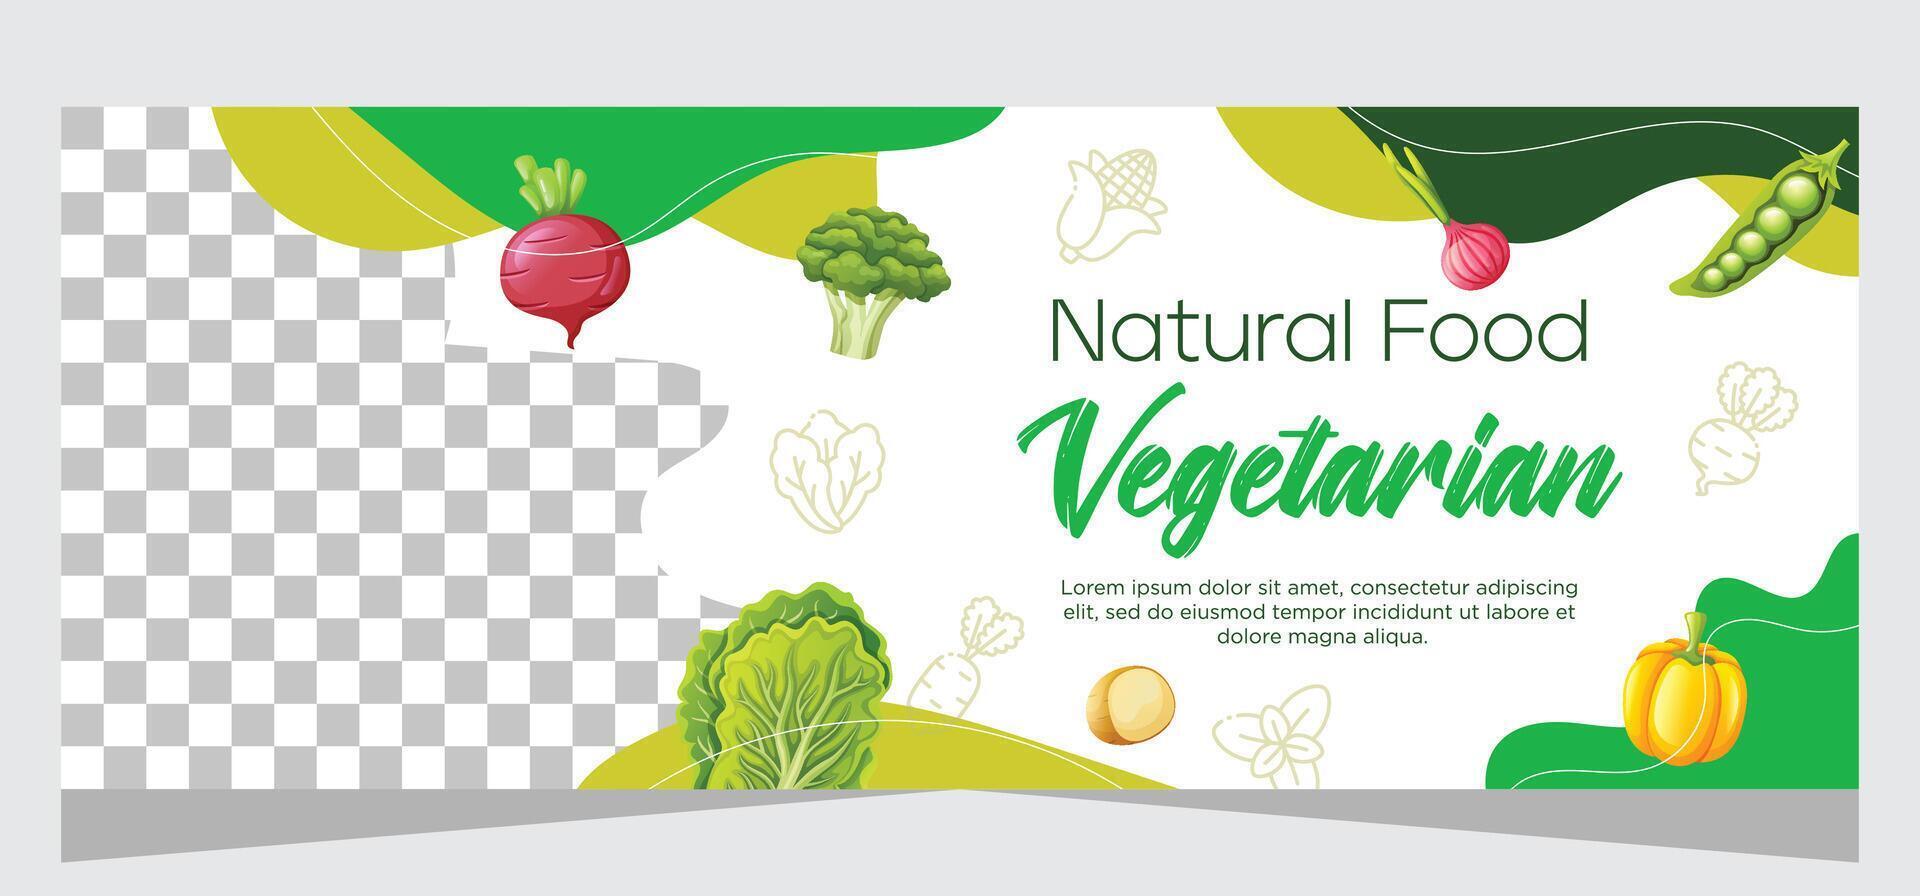 vegetariano horizontal bandera modelo diseño vector